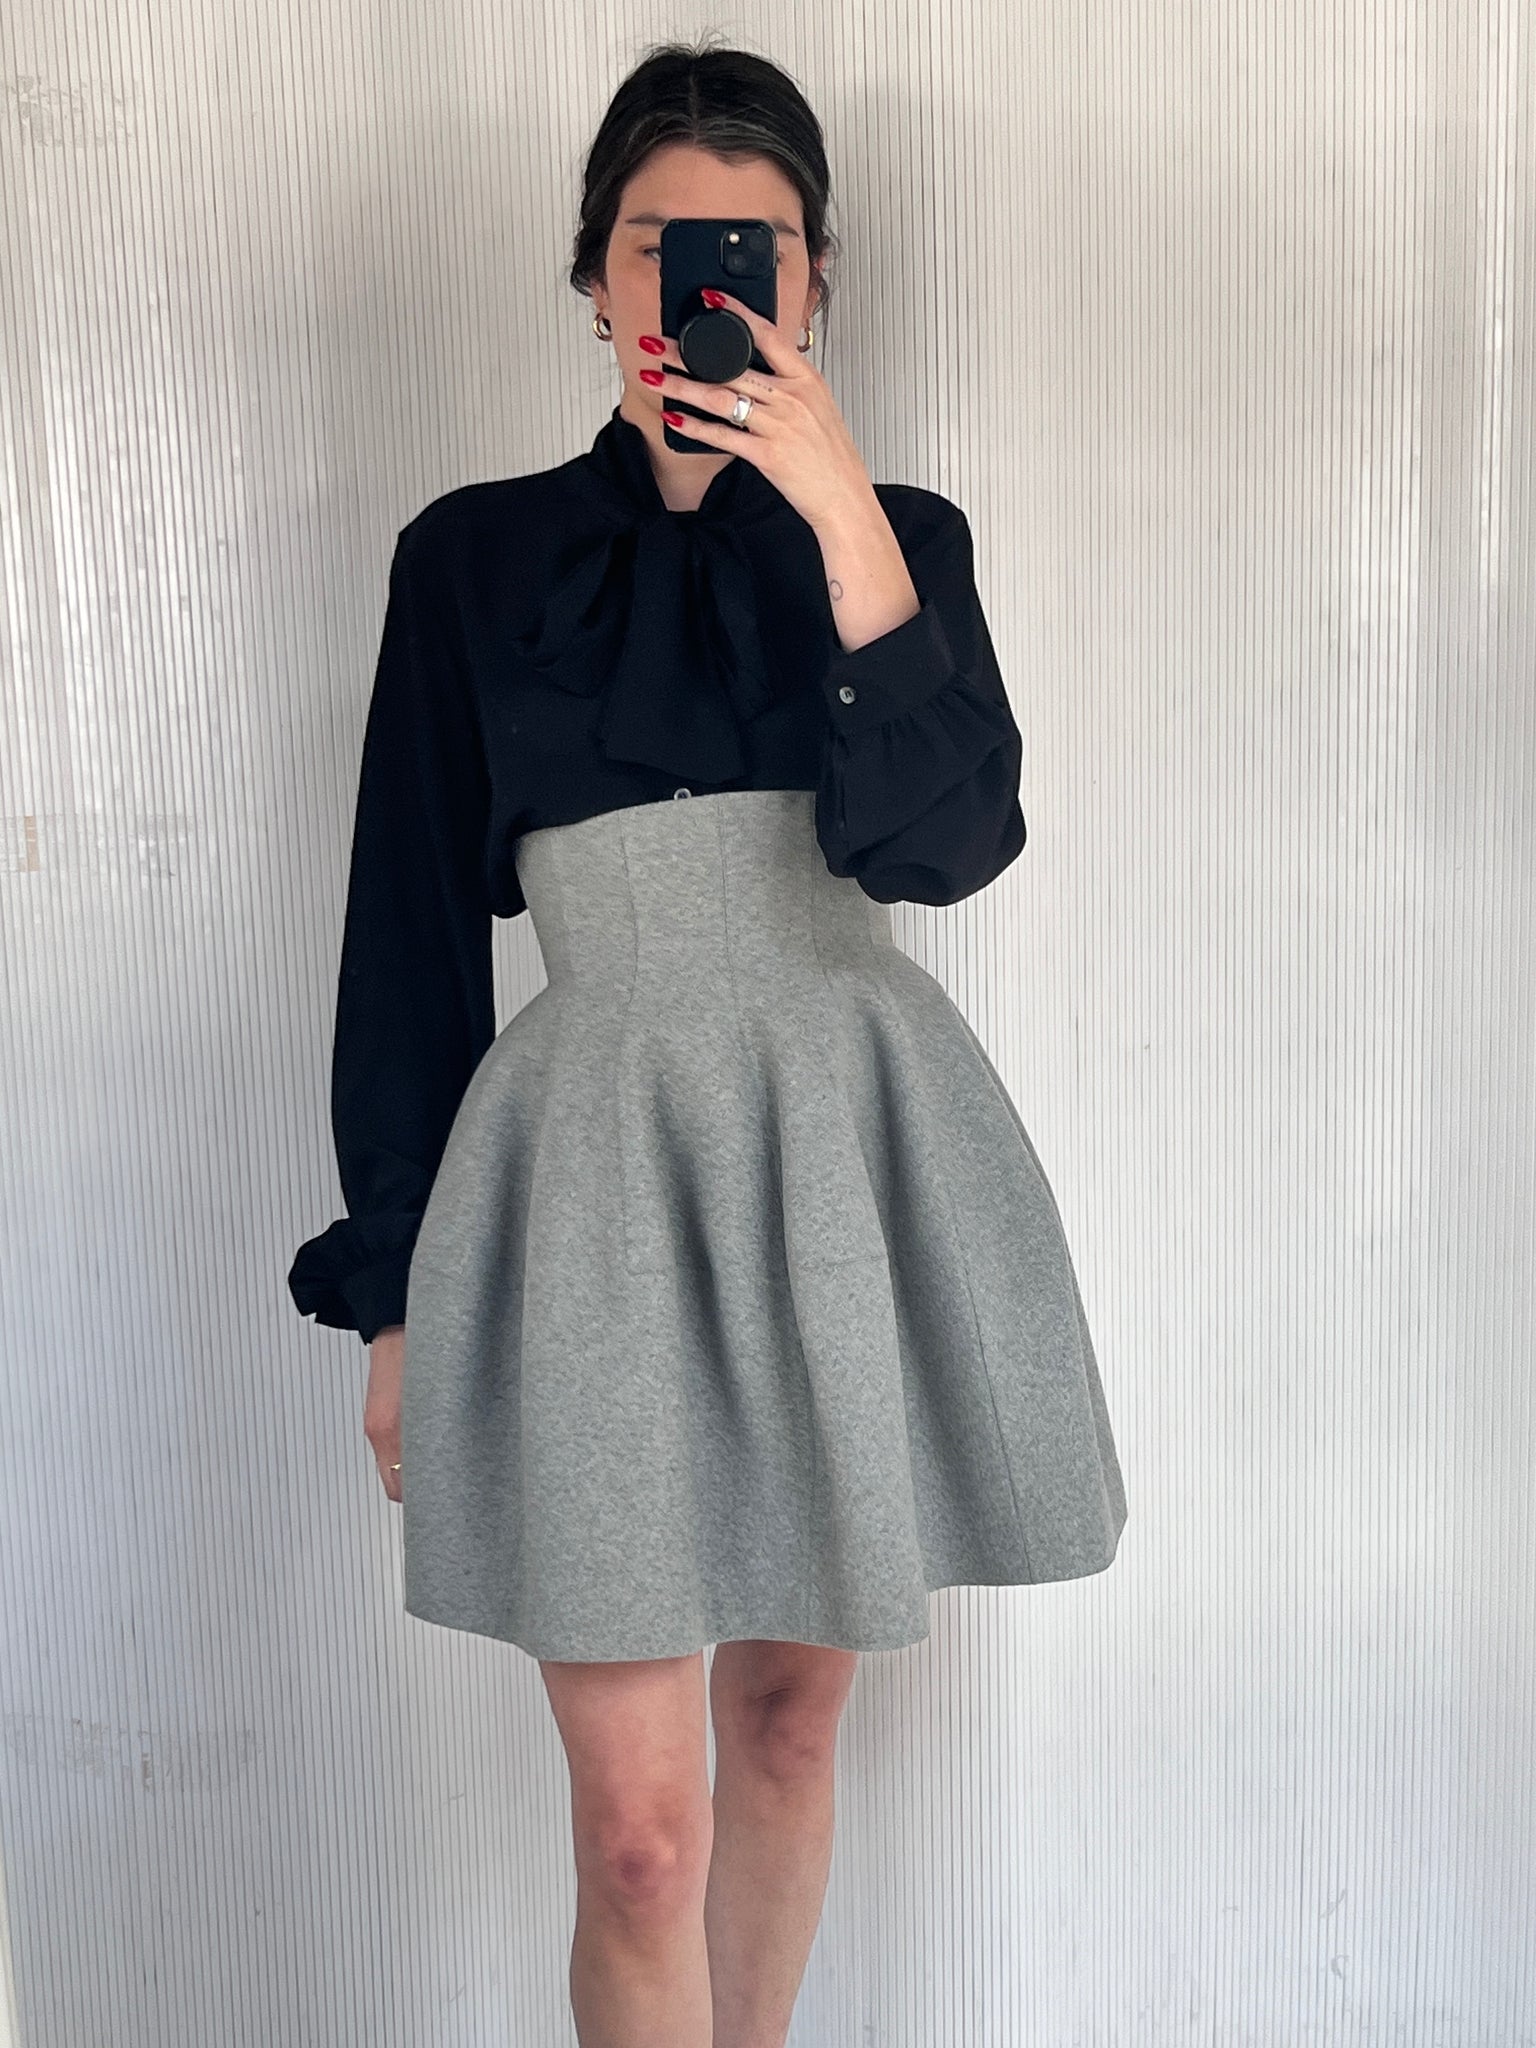 Alaïa gray structured skirt